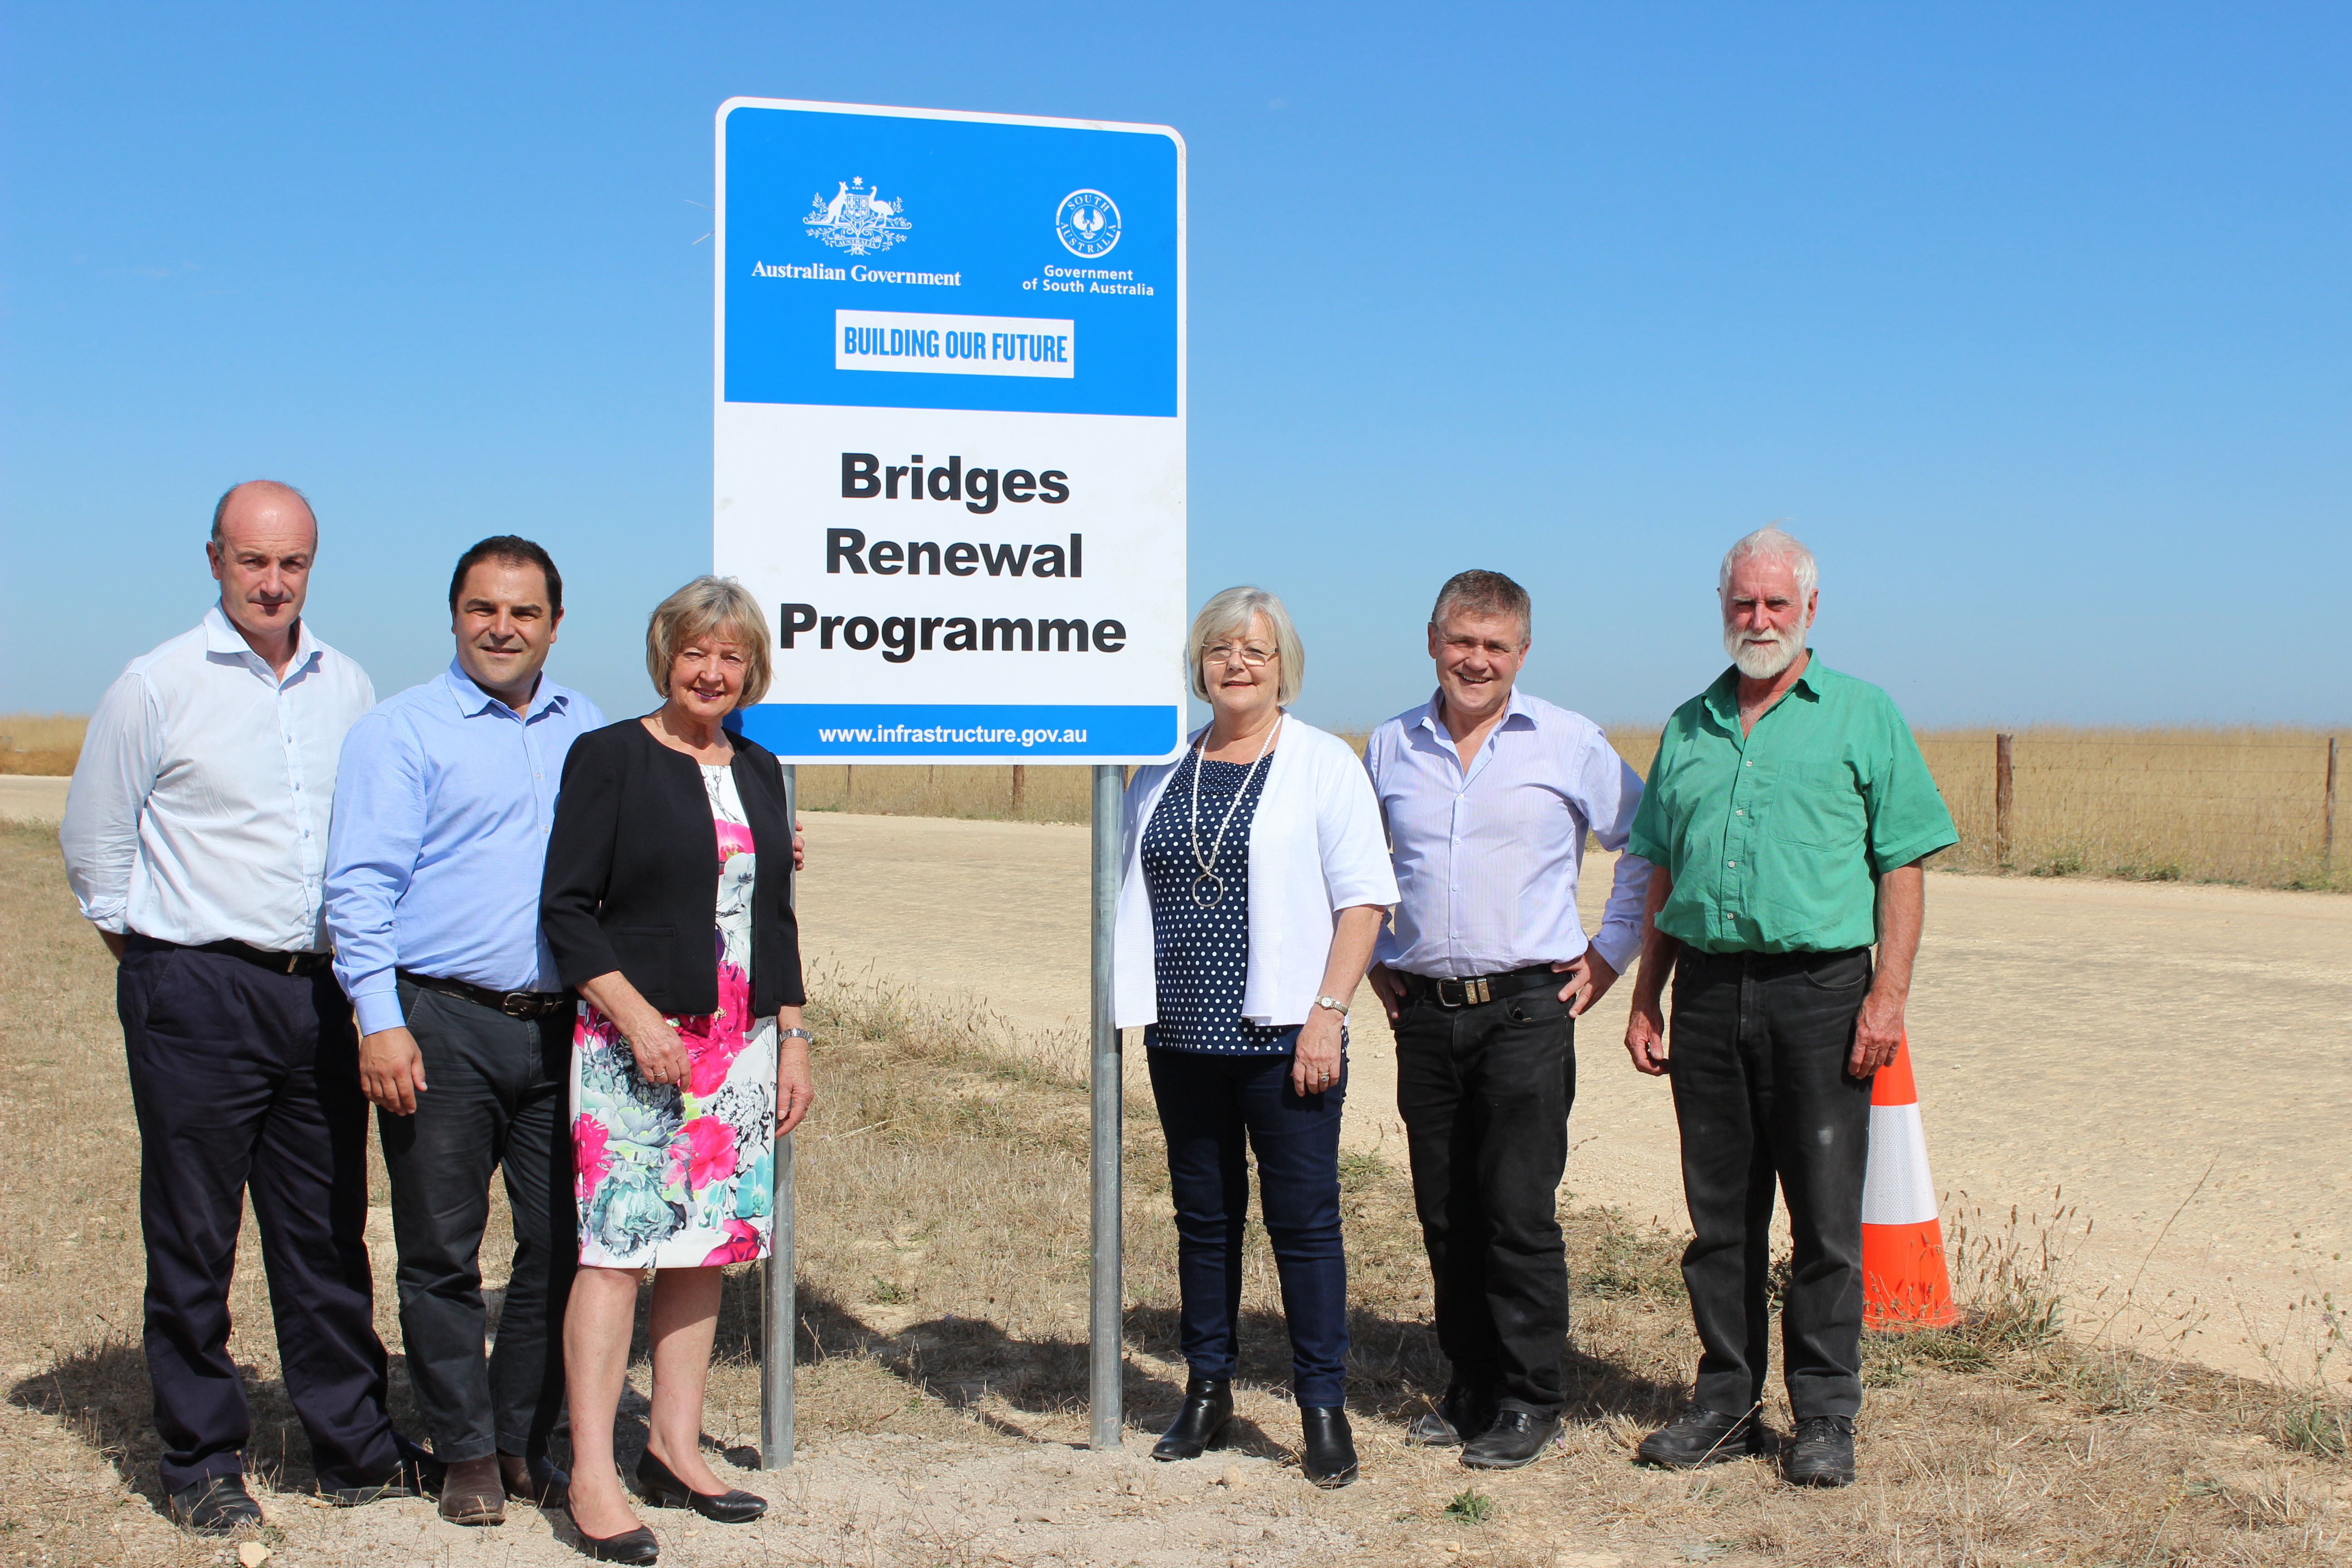 Bridges renewal for Moyhall Road culvert